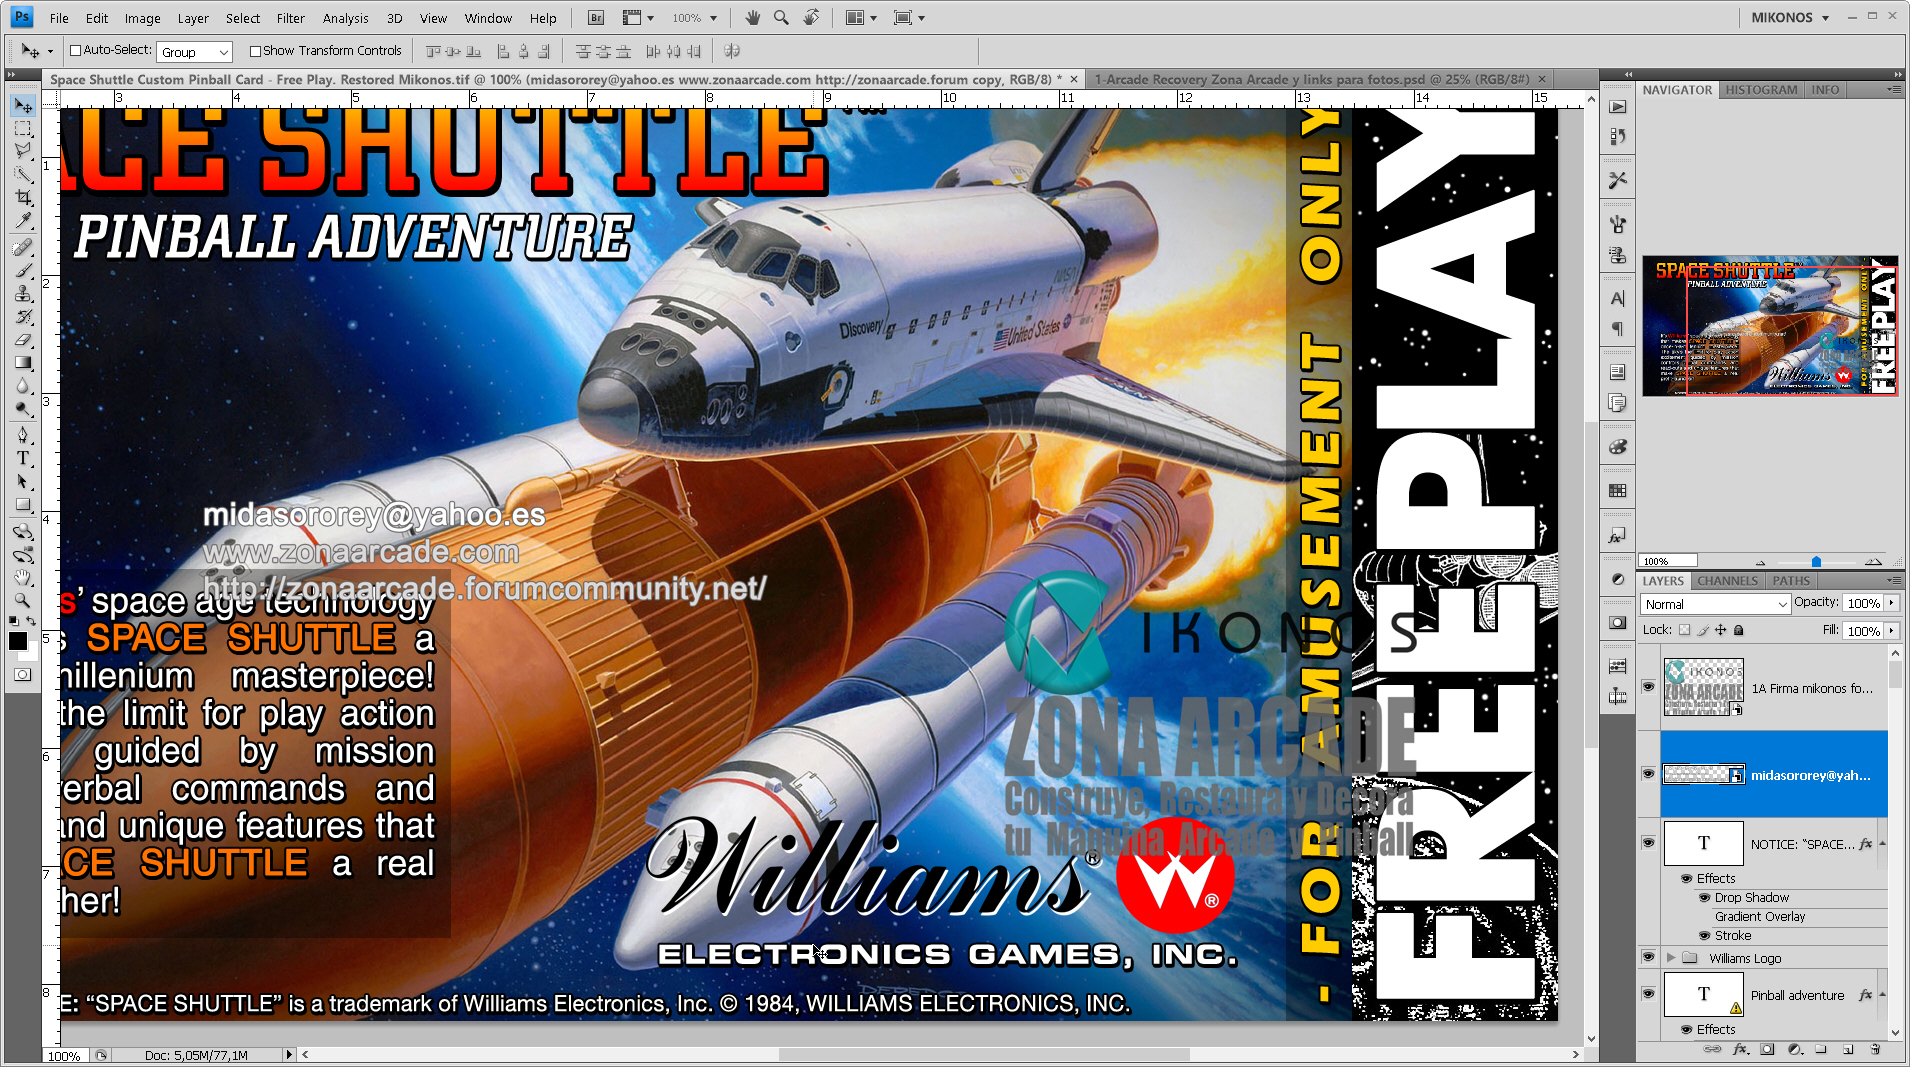 Space-Shuttle-Custom-Pinball-Card-Free-Play-Mikonos2